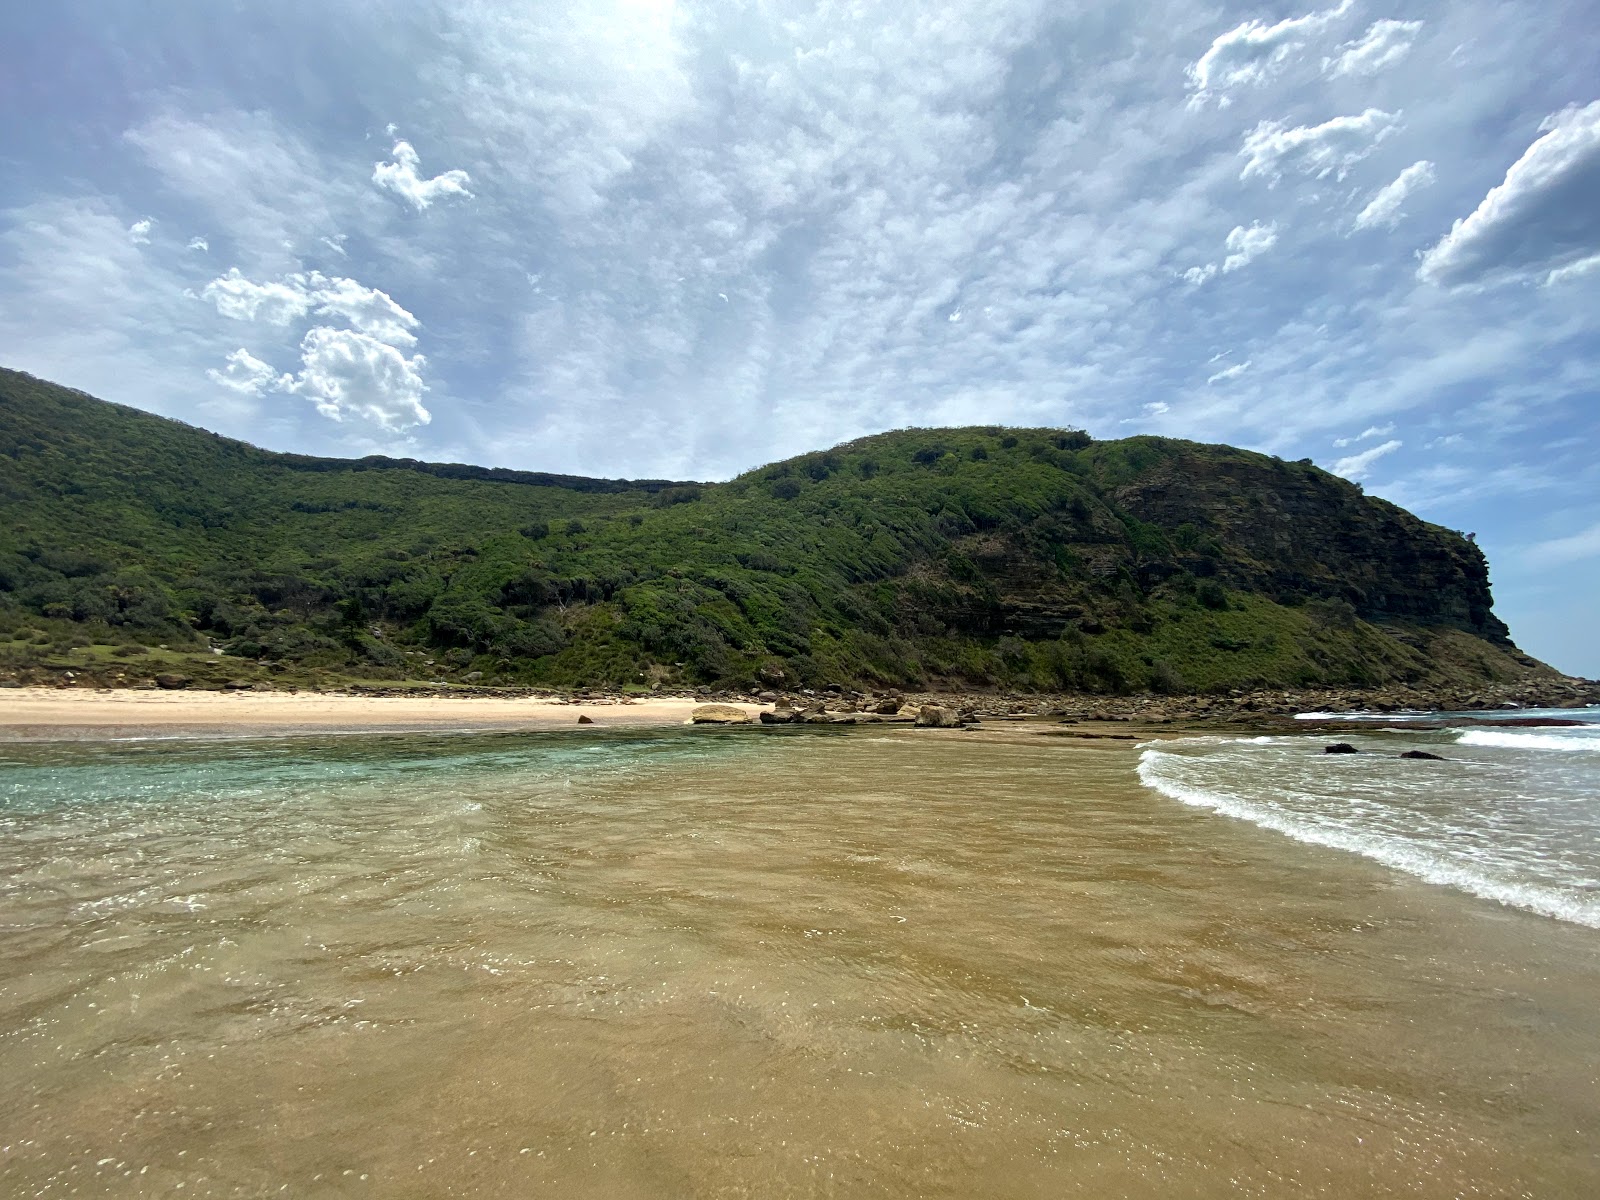 Foto di Werrong Beach ubicato in zona naturale